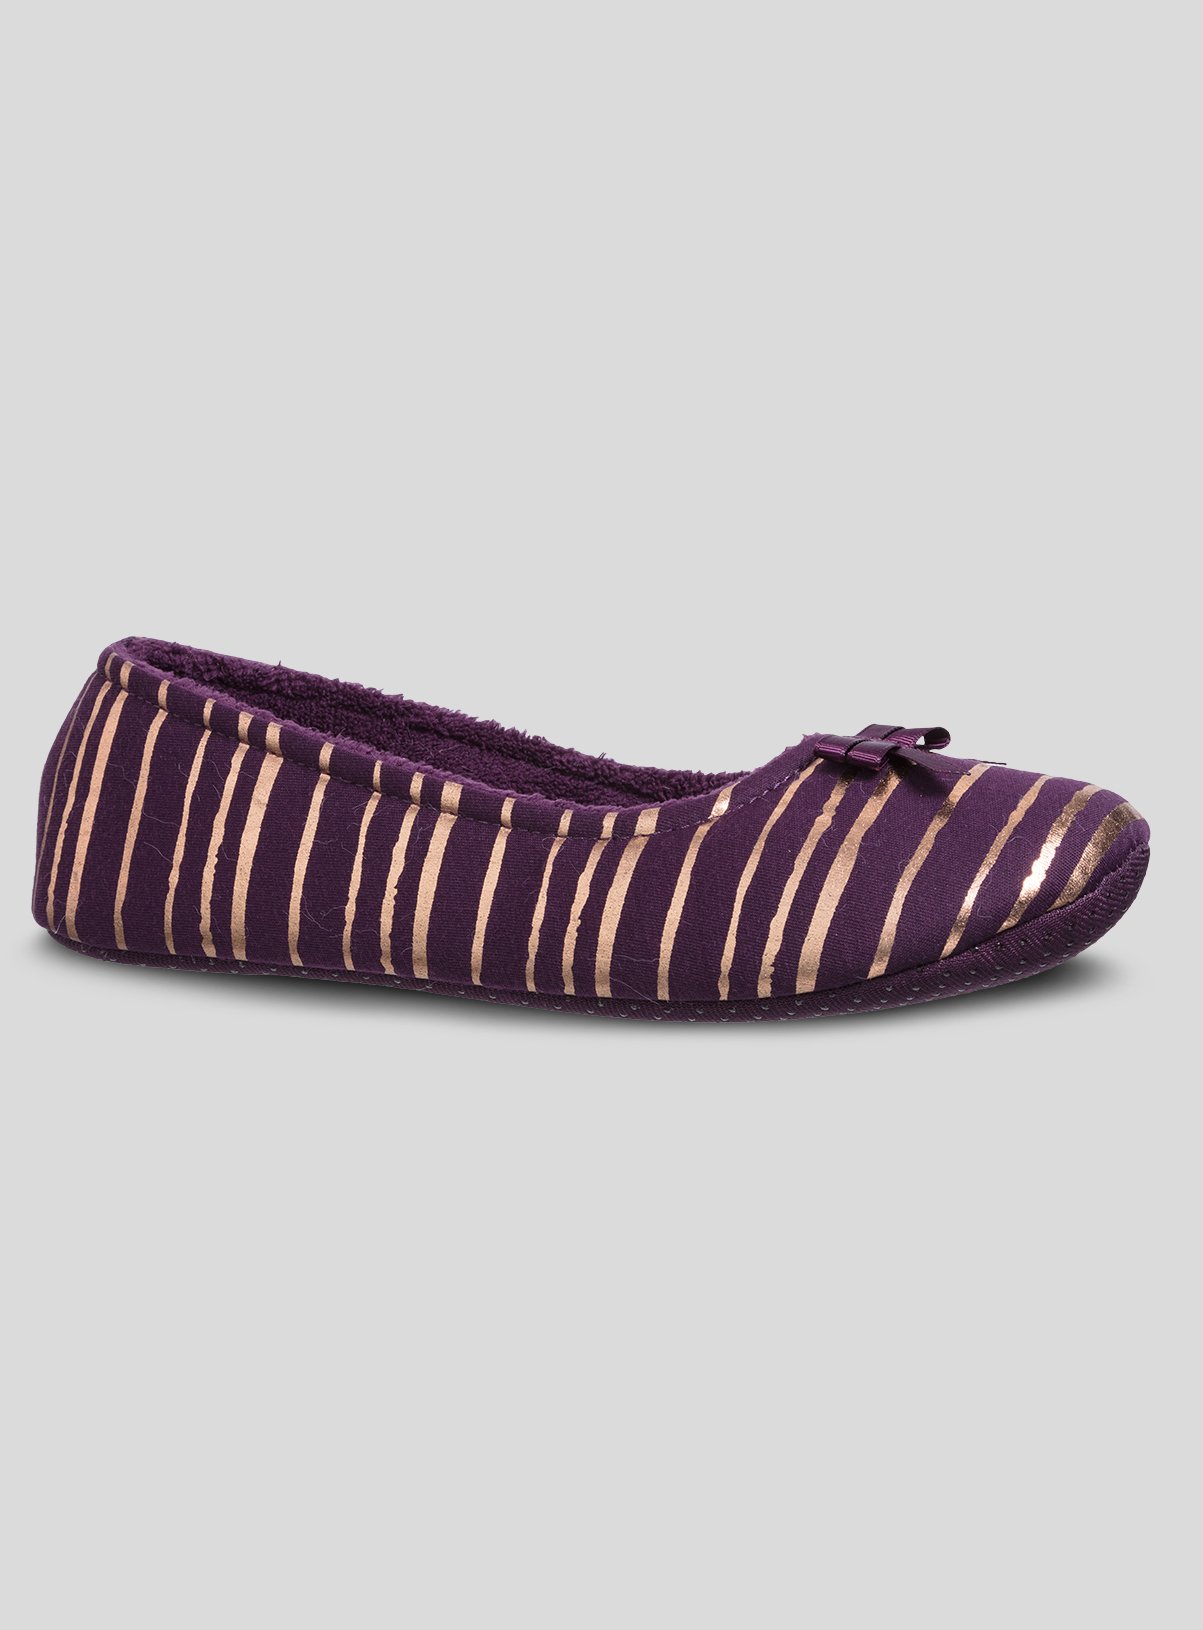 dark purple slippers